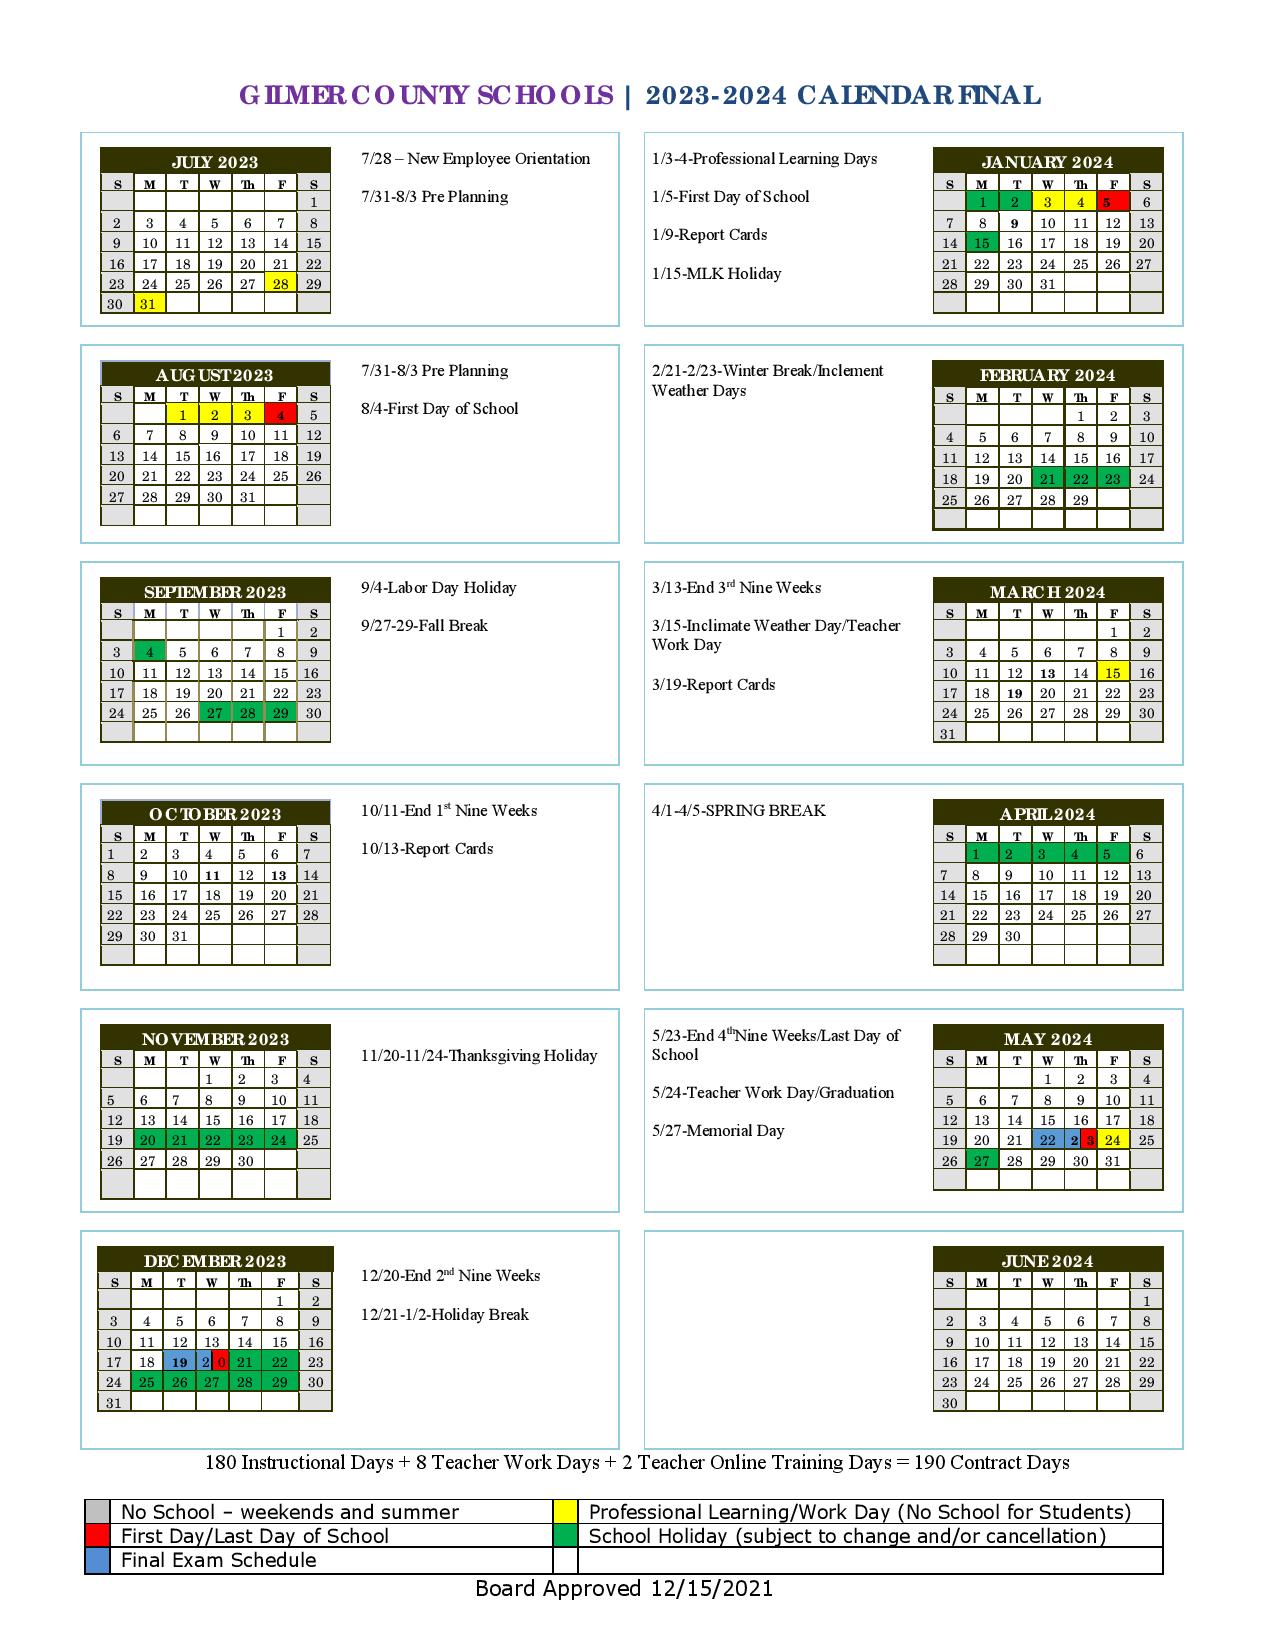 Gilmer County Charter Schools Calendar 2023-2024 in PDF